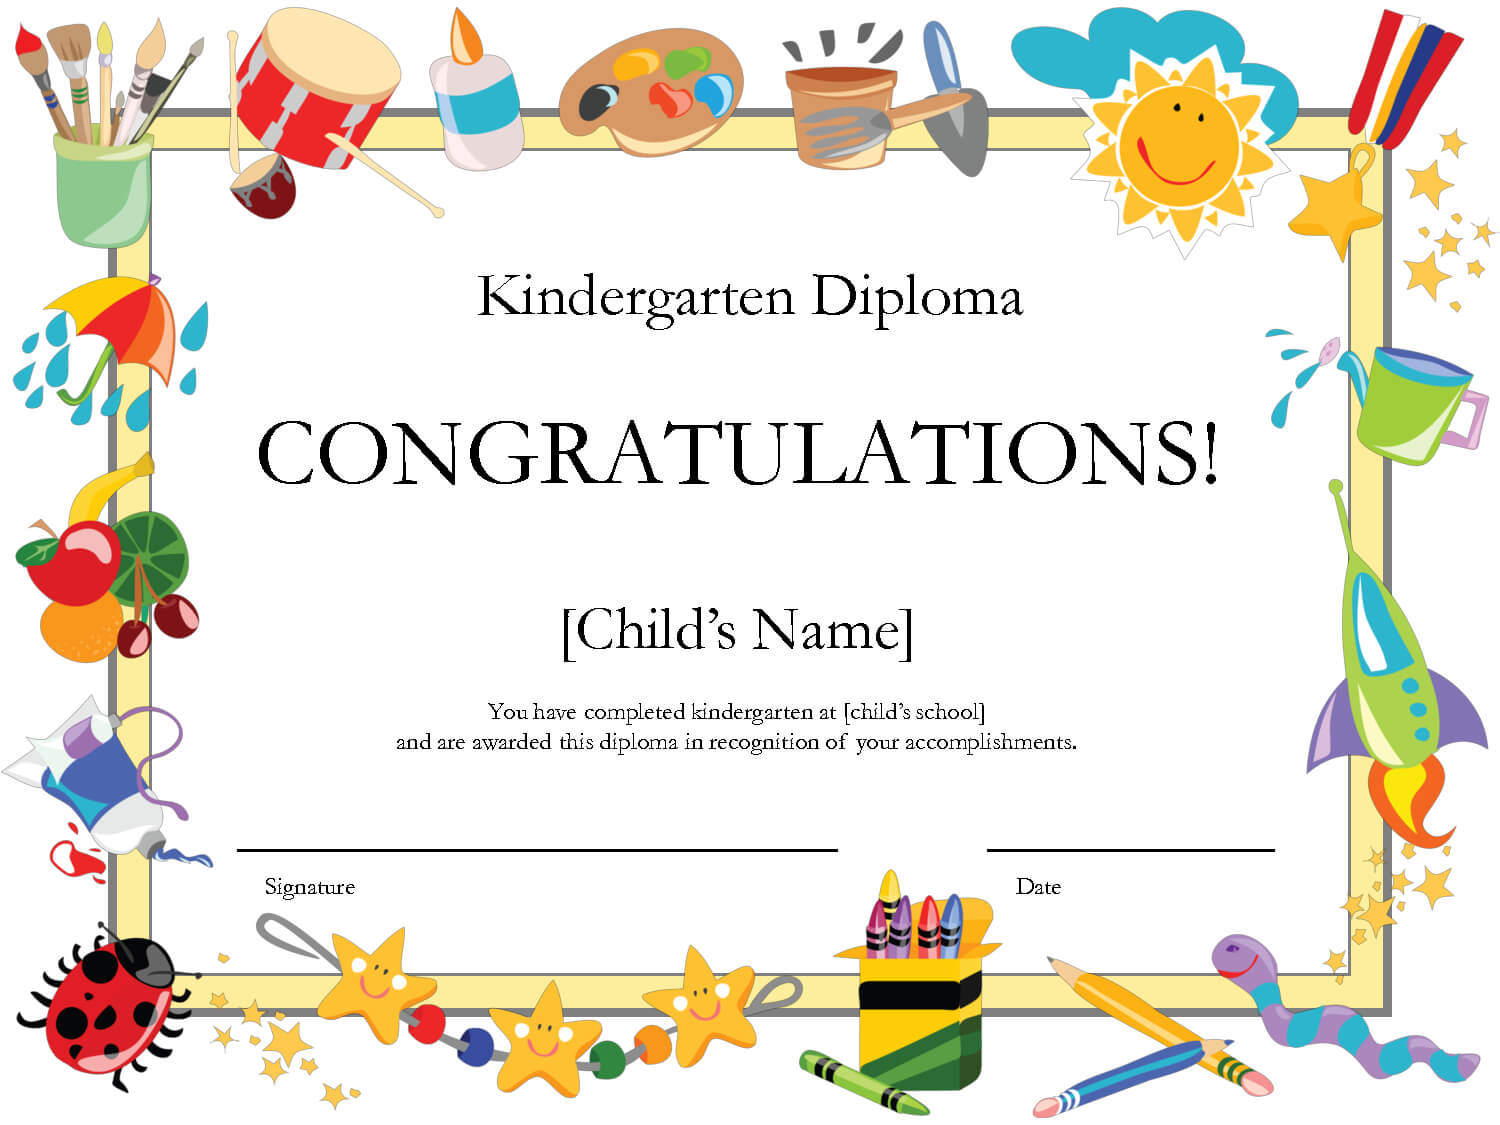 Free Printable Kindergarten Diplomaprintshowergames In School Certificate Templates Free